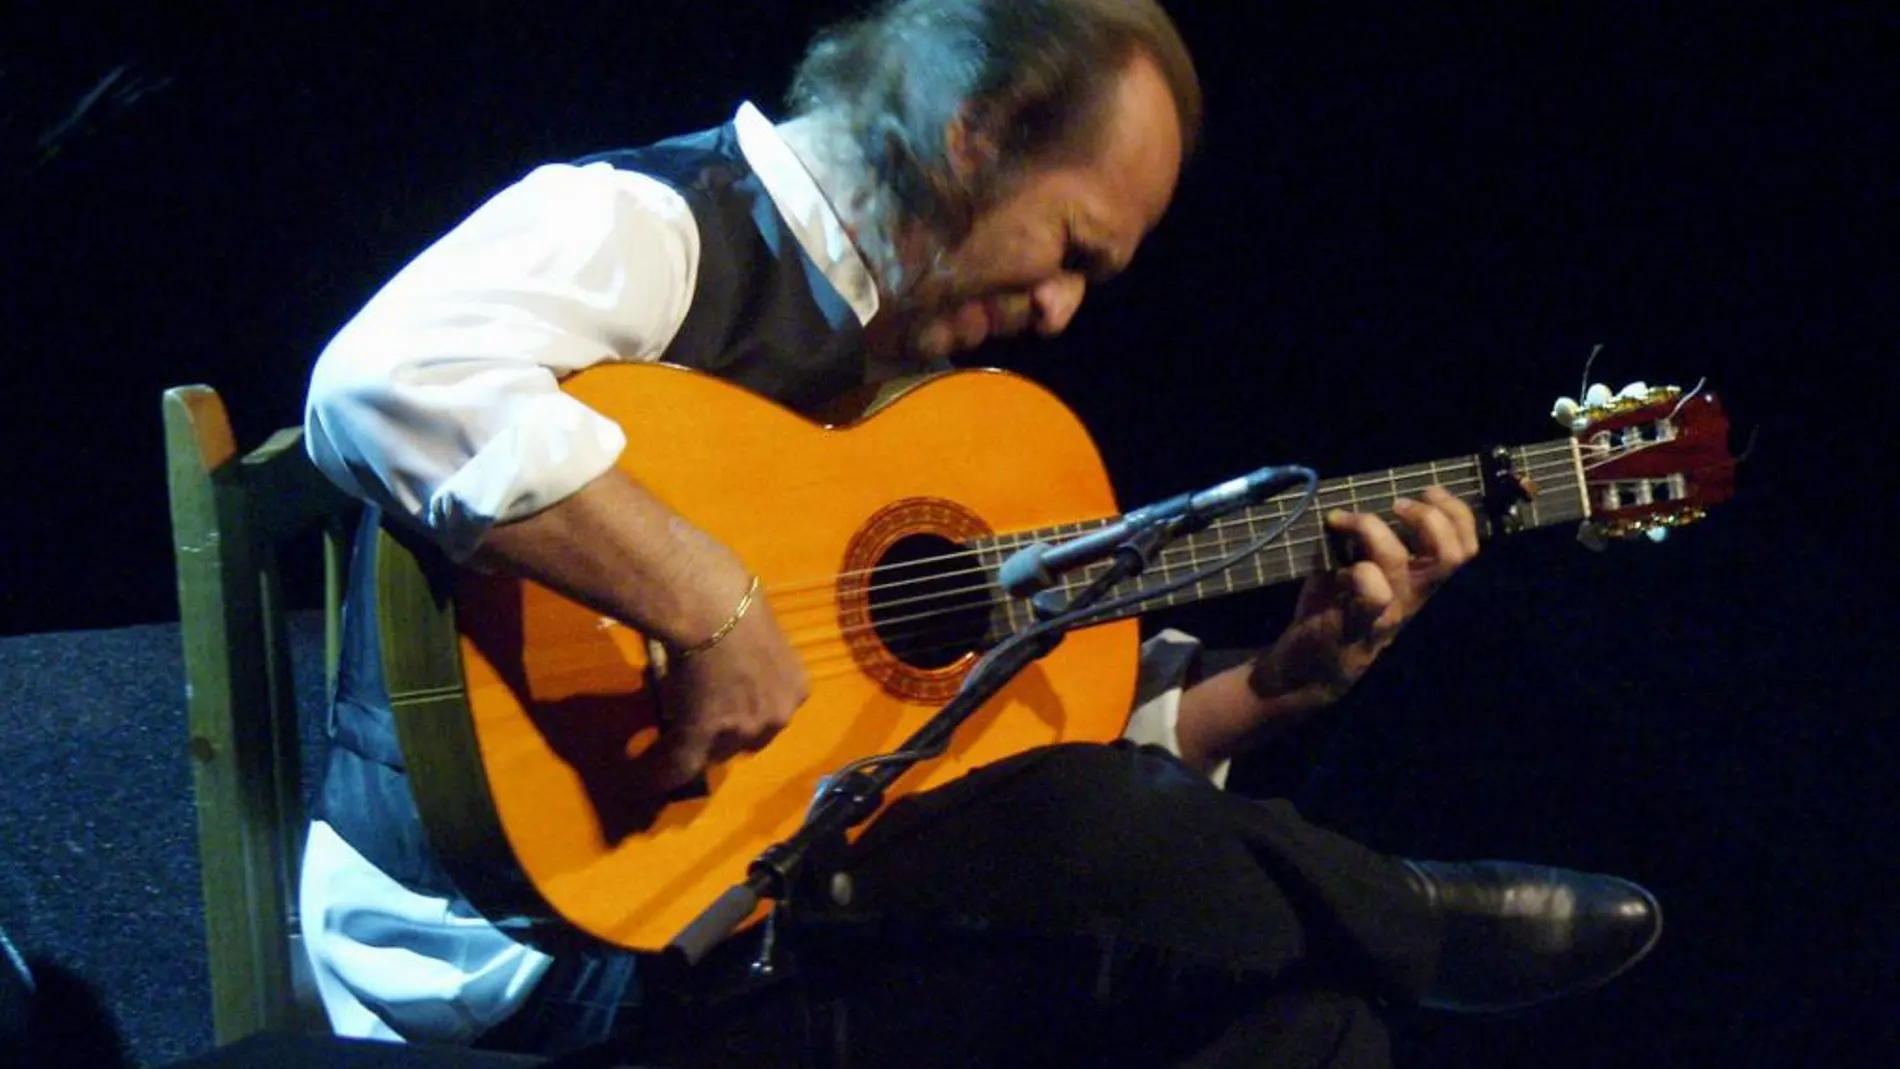 El mundo de la cultura llora la pérdida del guitarrista Paco de Lucía.